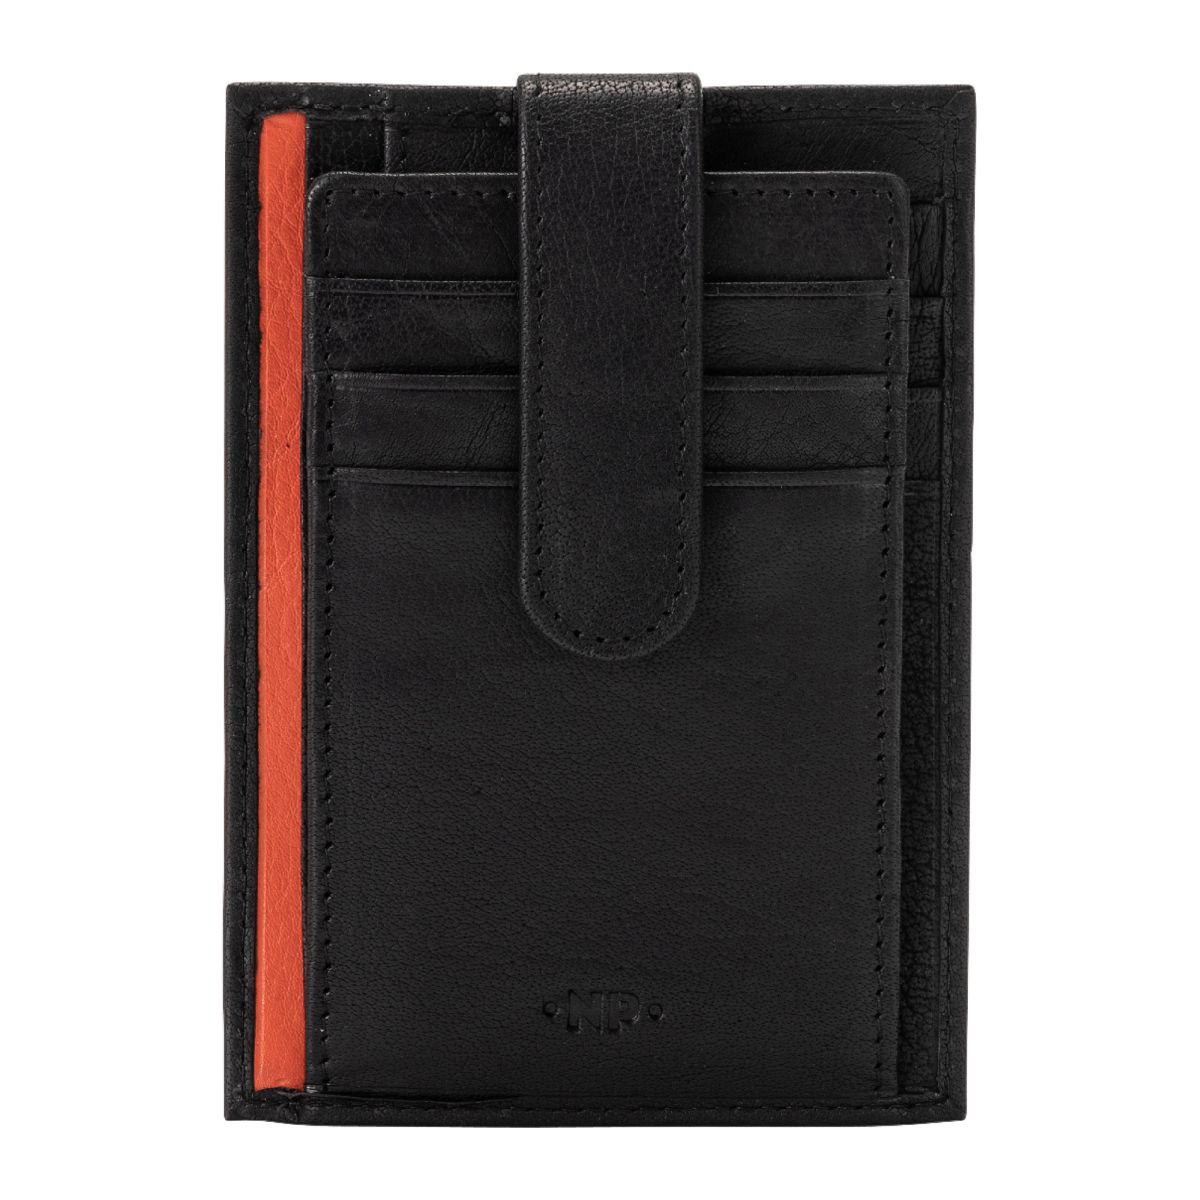 Compact multi color credit card holder wallet - Black